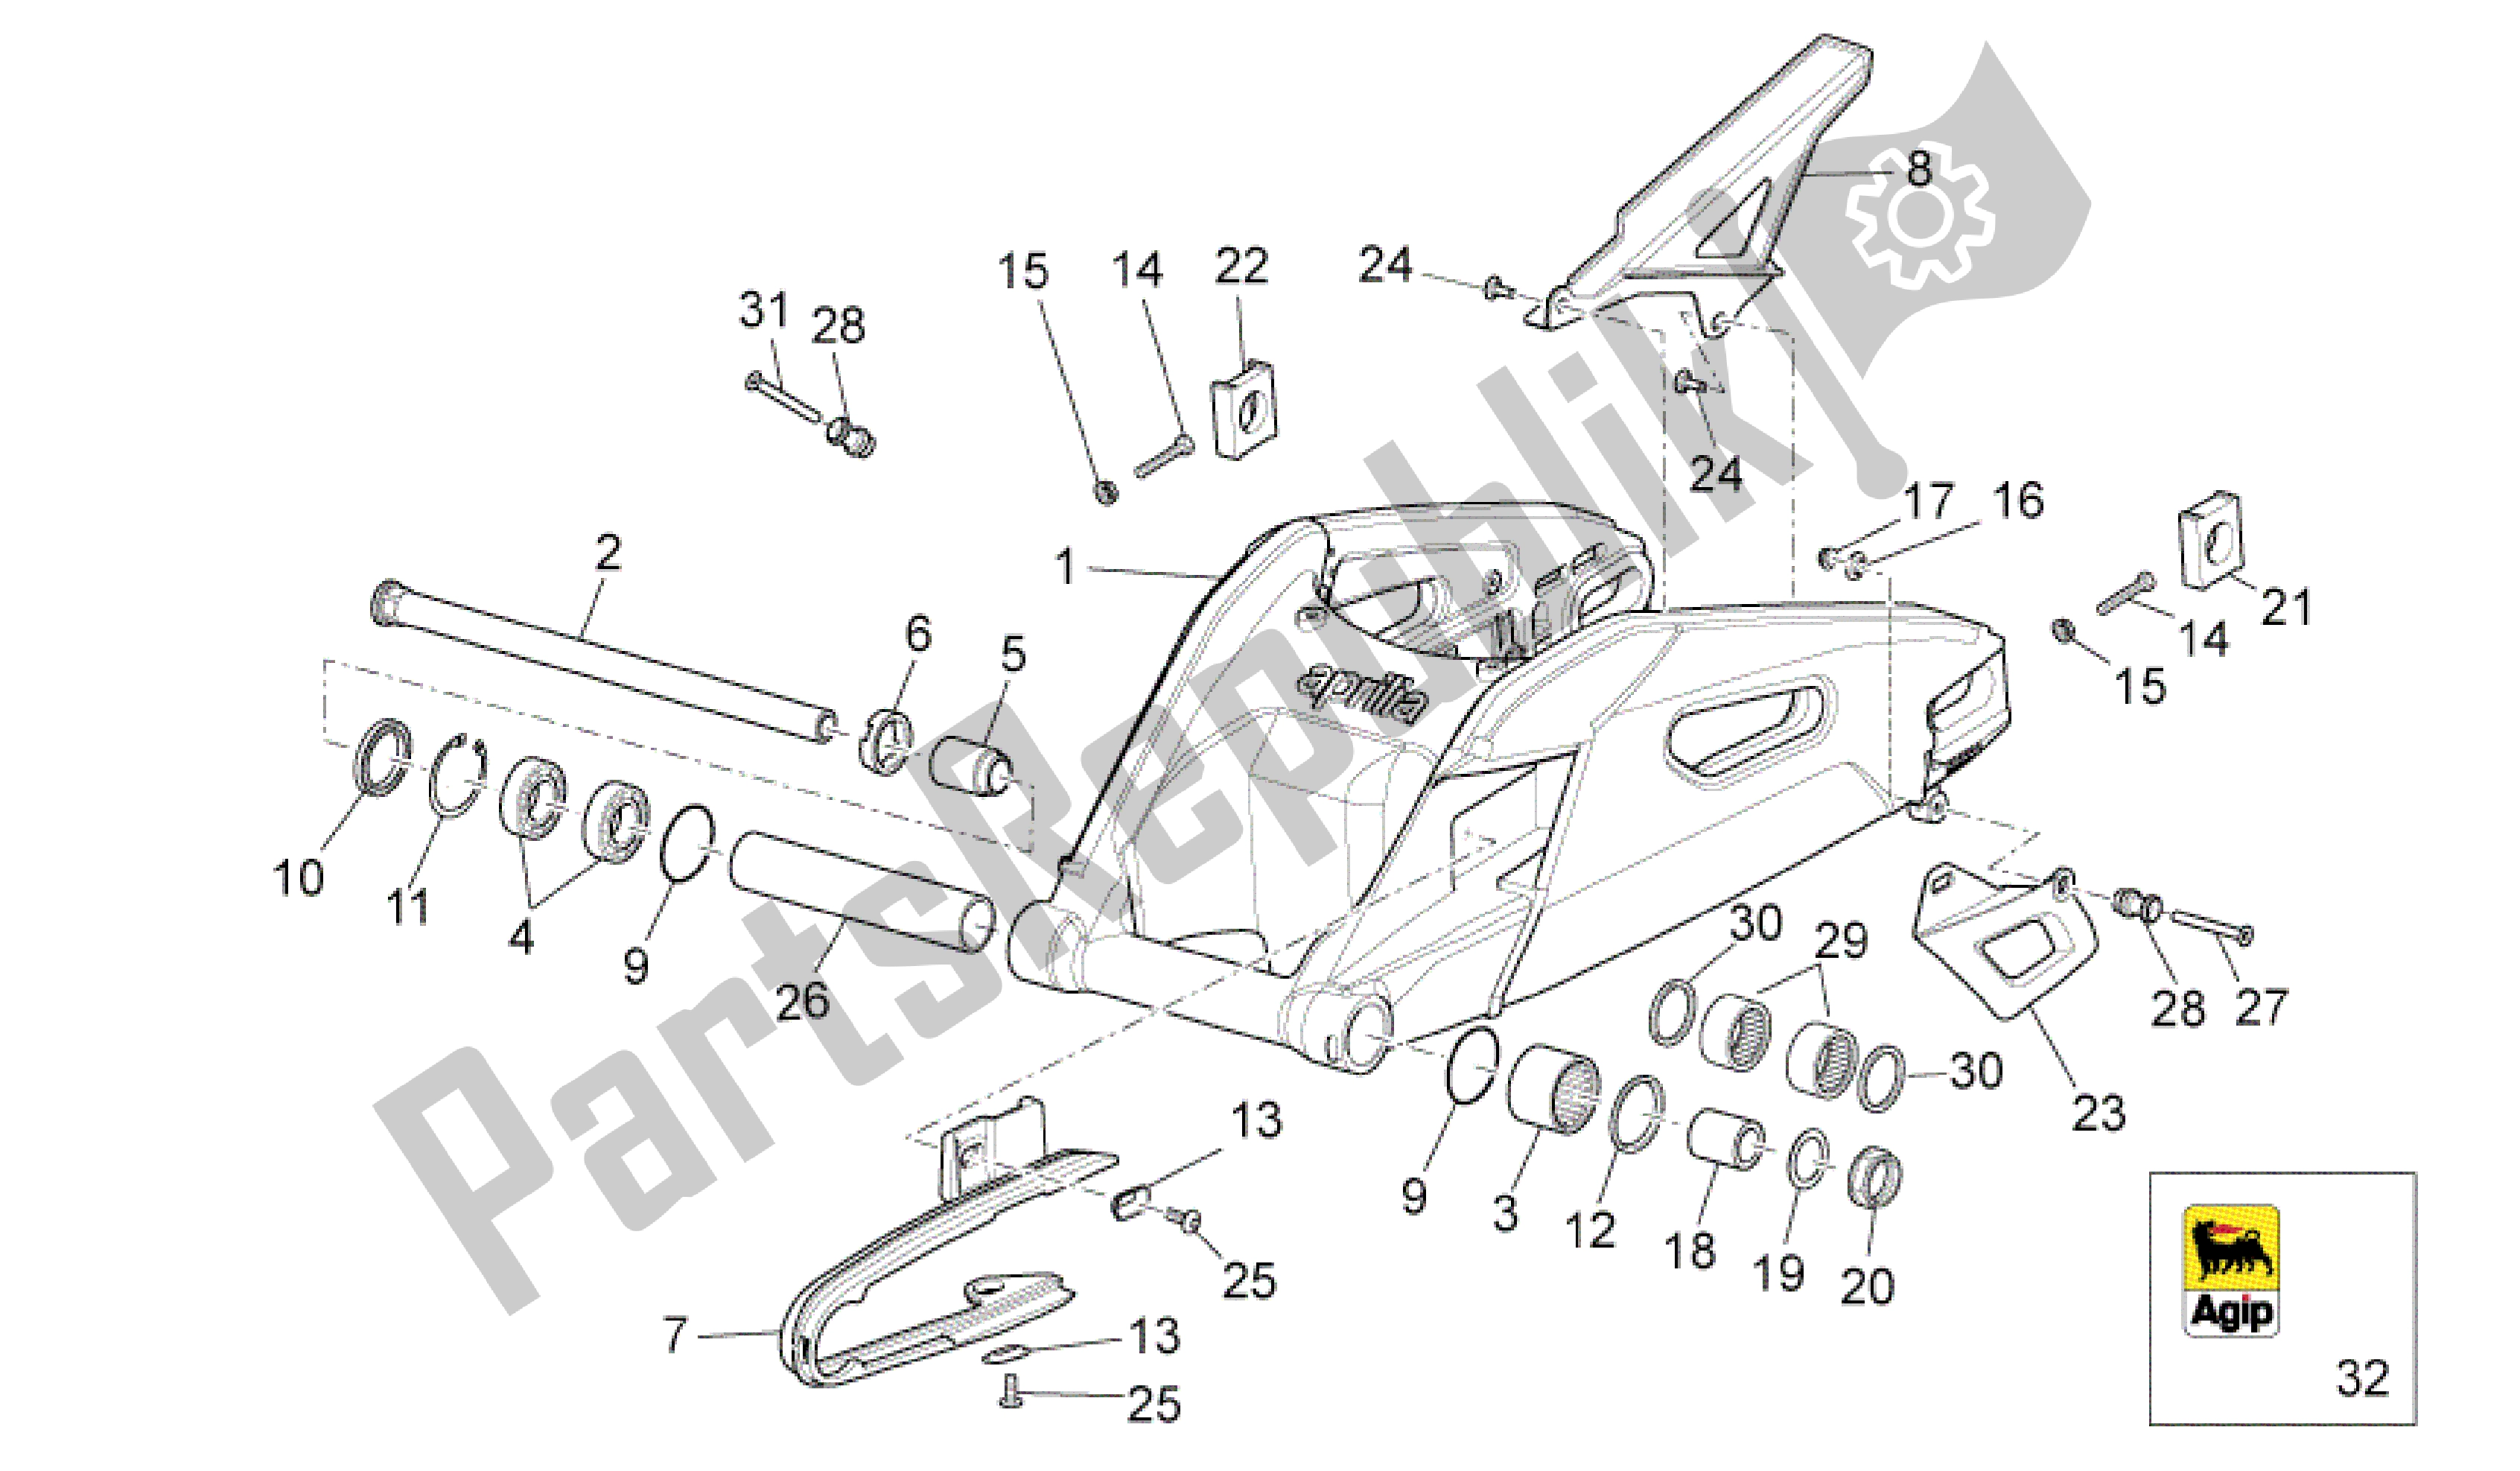 Todas las partes para Brazo Oscilante de Aprilia RSV4 Tuono V4 R Aprc ABS 1000 2014